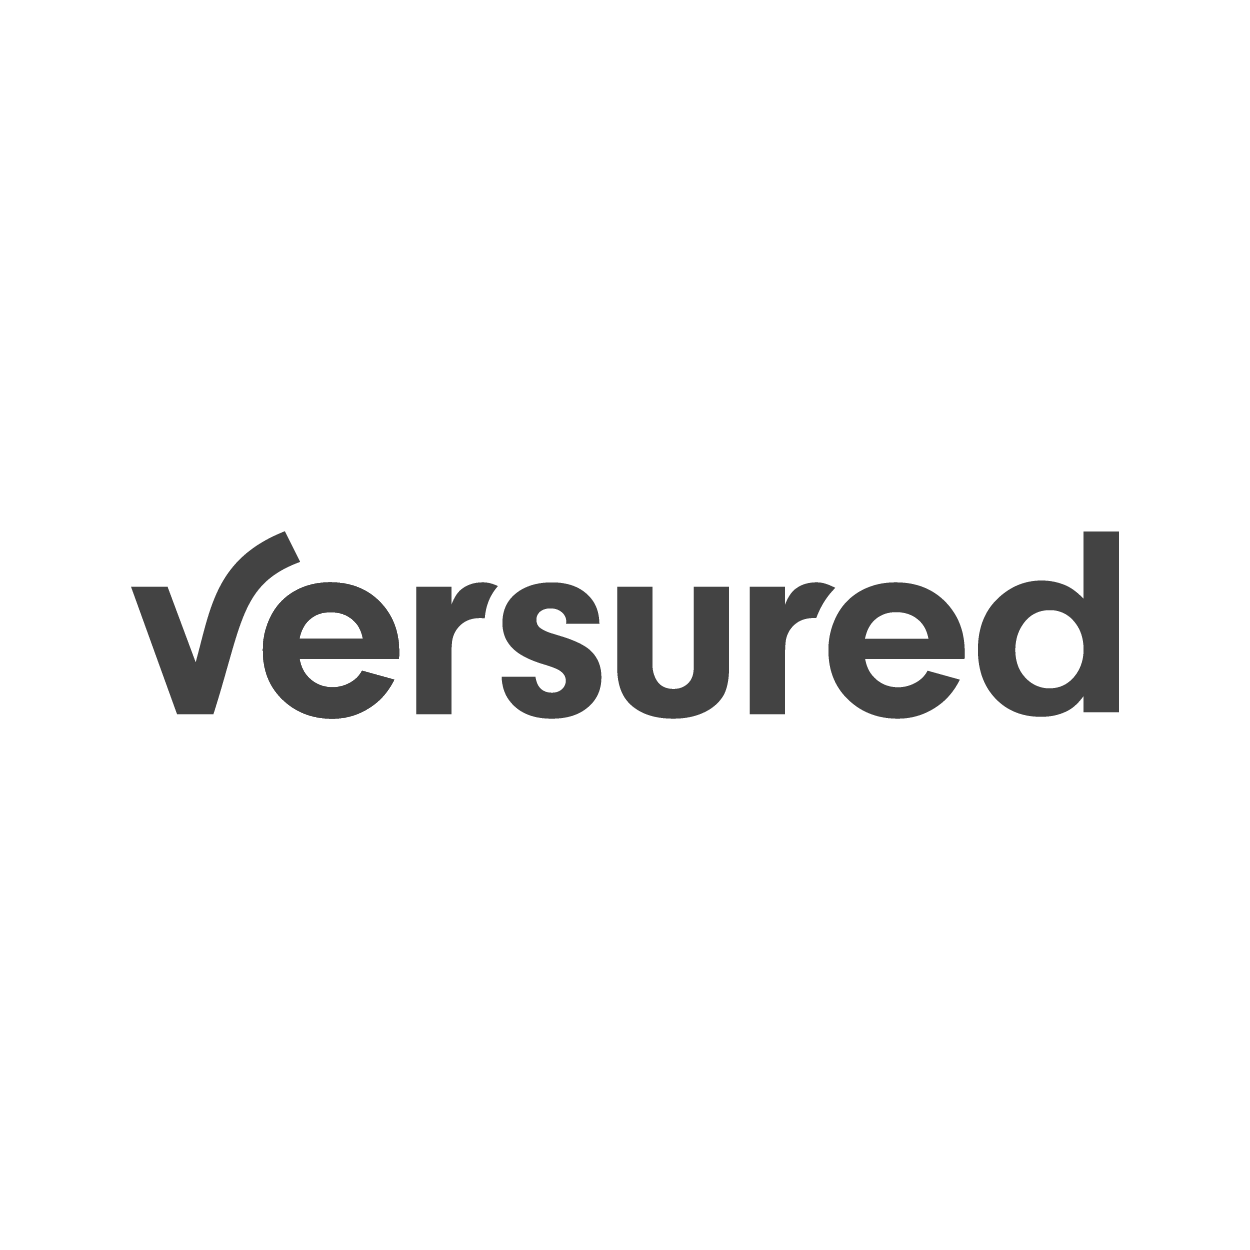 versured Logo